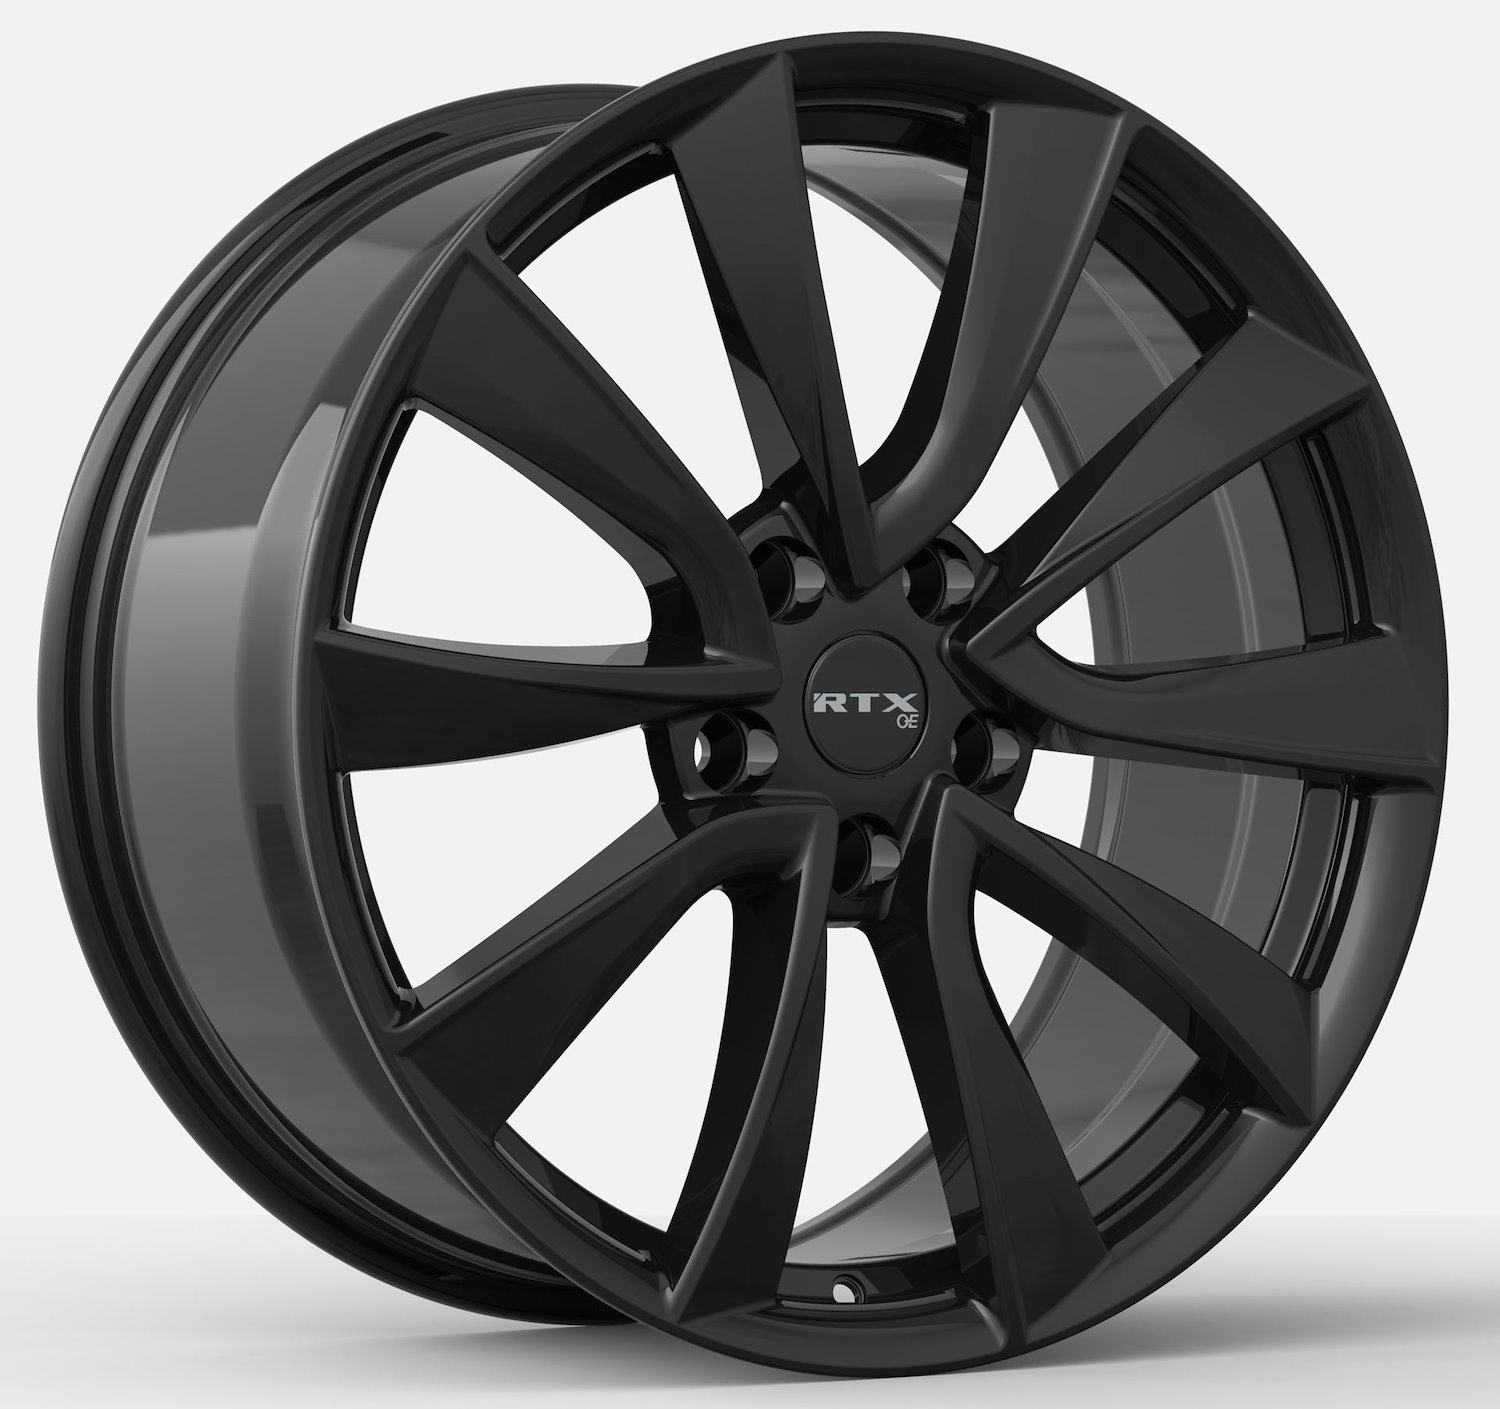 083211 OE-Series TS-01 Wheel [Size: 19" x 8.50"] Gloss Black Finish